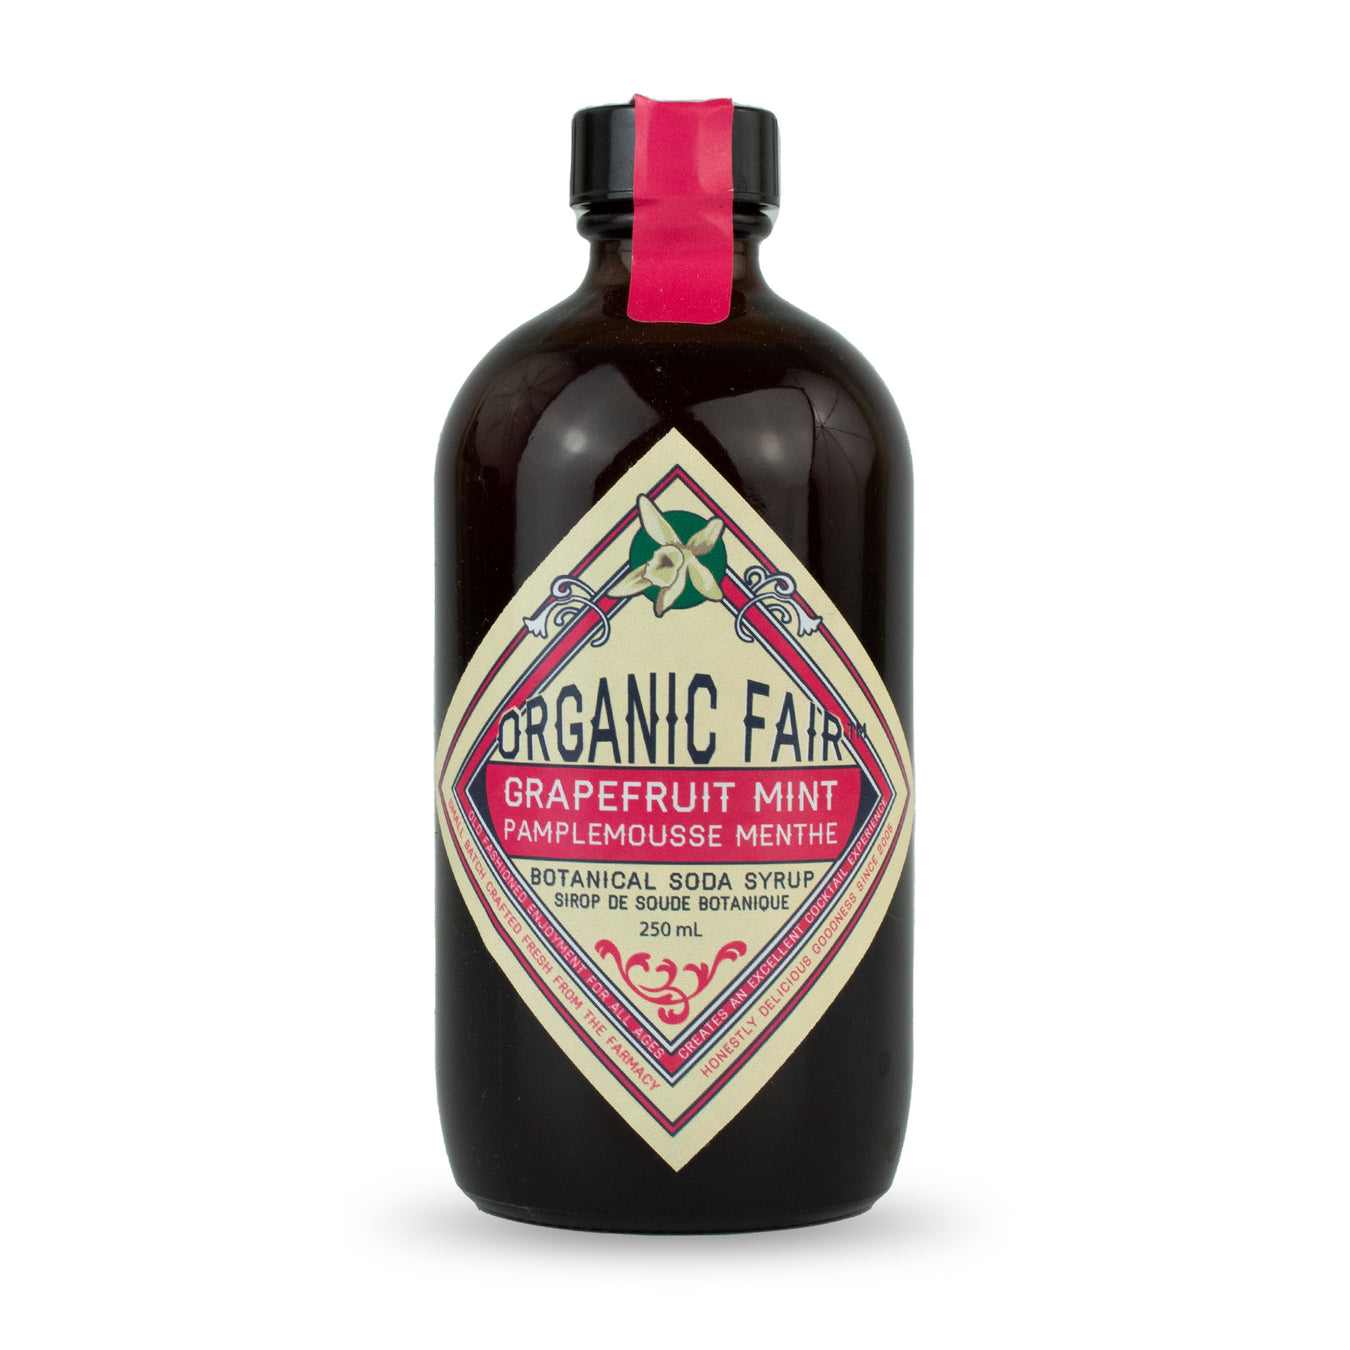 organic fair grapefruit mint botanical soda syrup bottle